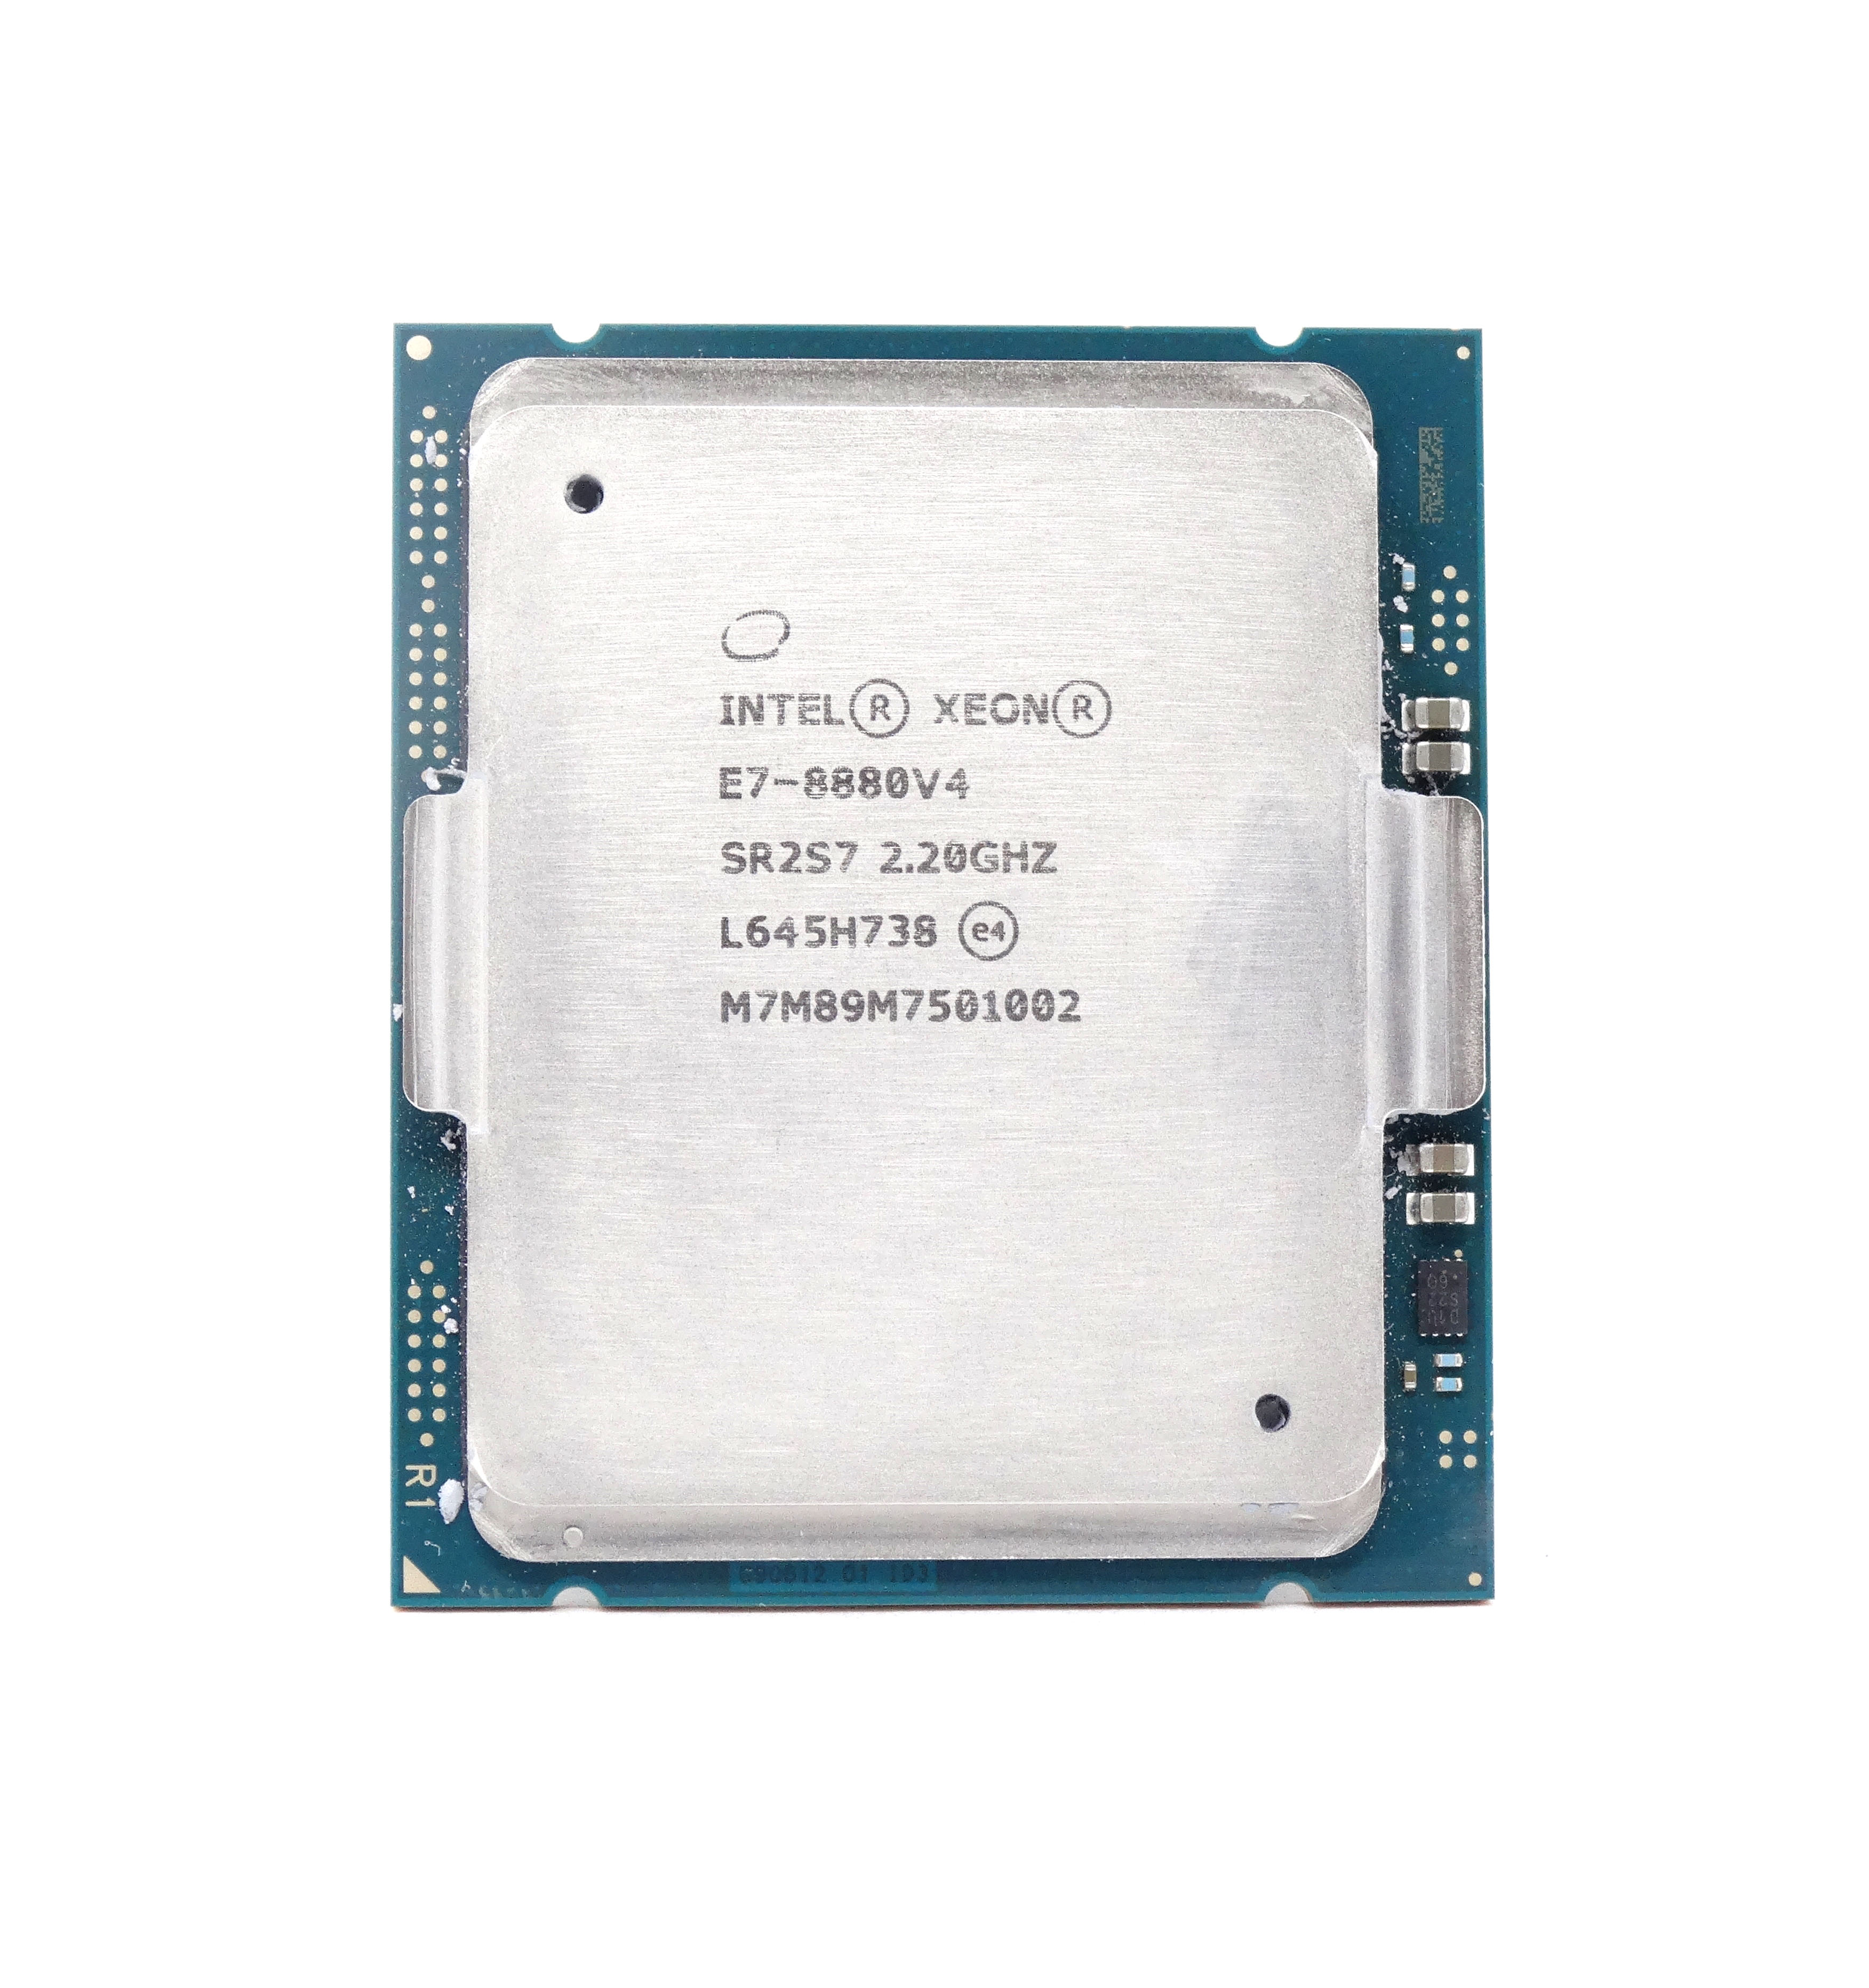 Intel Xeon E7-8880v4 2.2GHz 22 Core 55MB LGA2011 CPU Processor (Intel Xeon E7-8880v4)